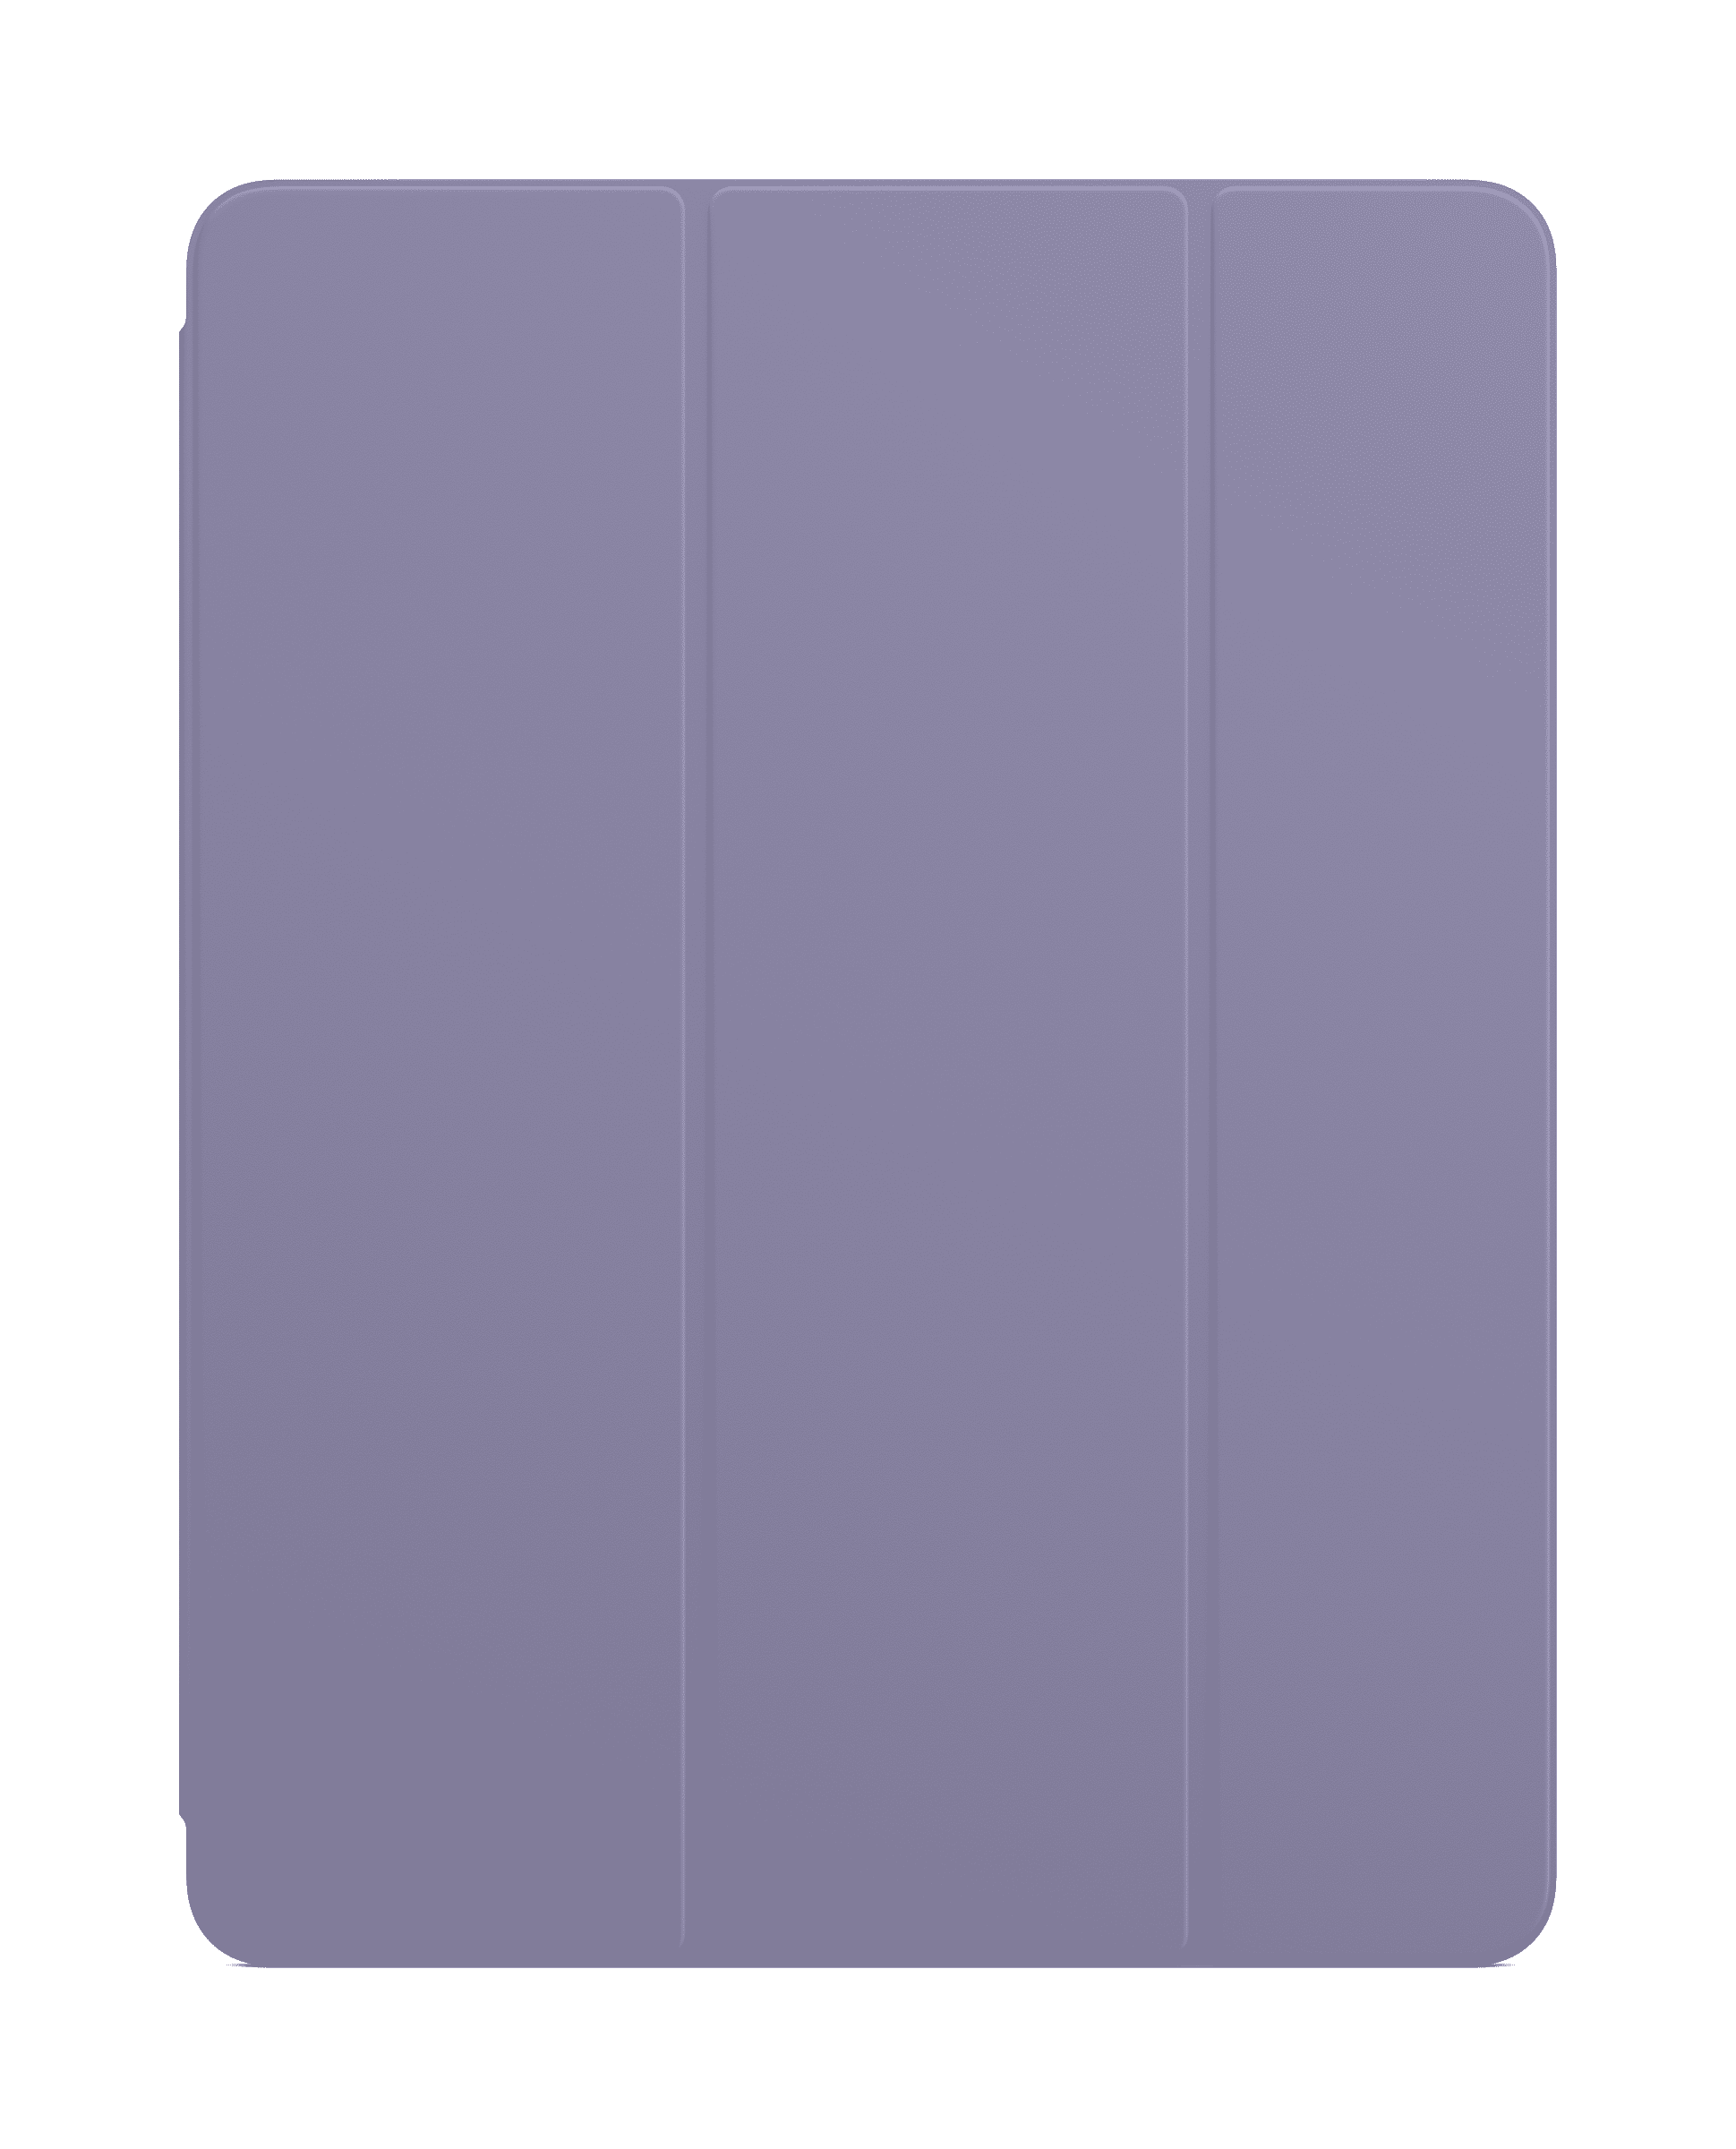 Smart Folio for iPad Pro 12.9-inch (5th generation) - Charcoal 